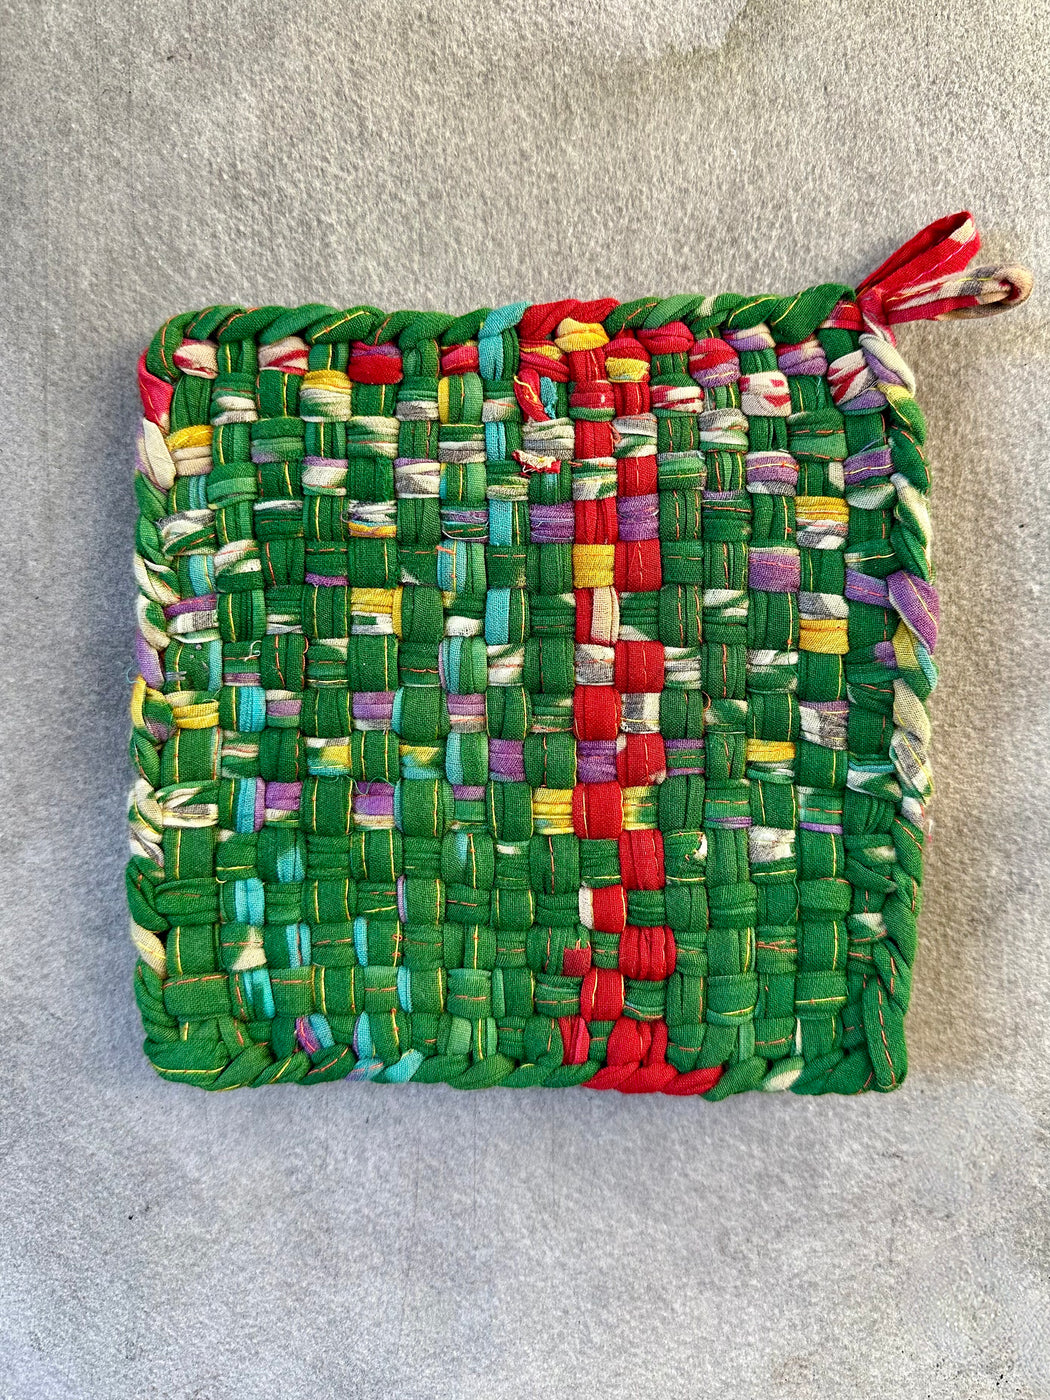 Woven Cotton Sari Potholders - Green & Red